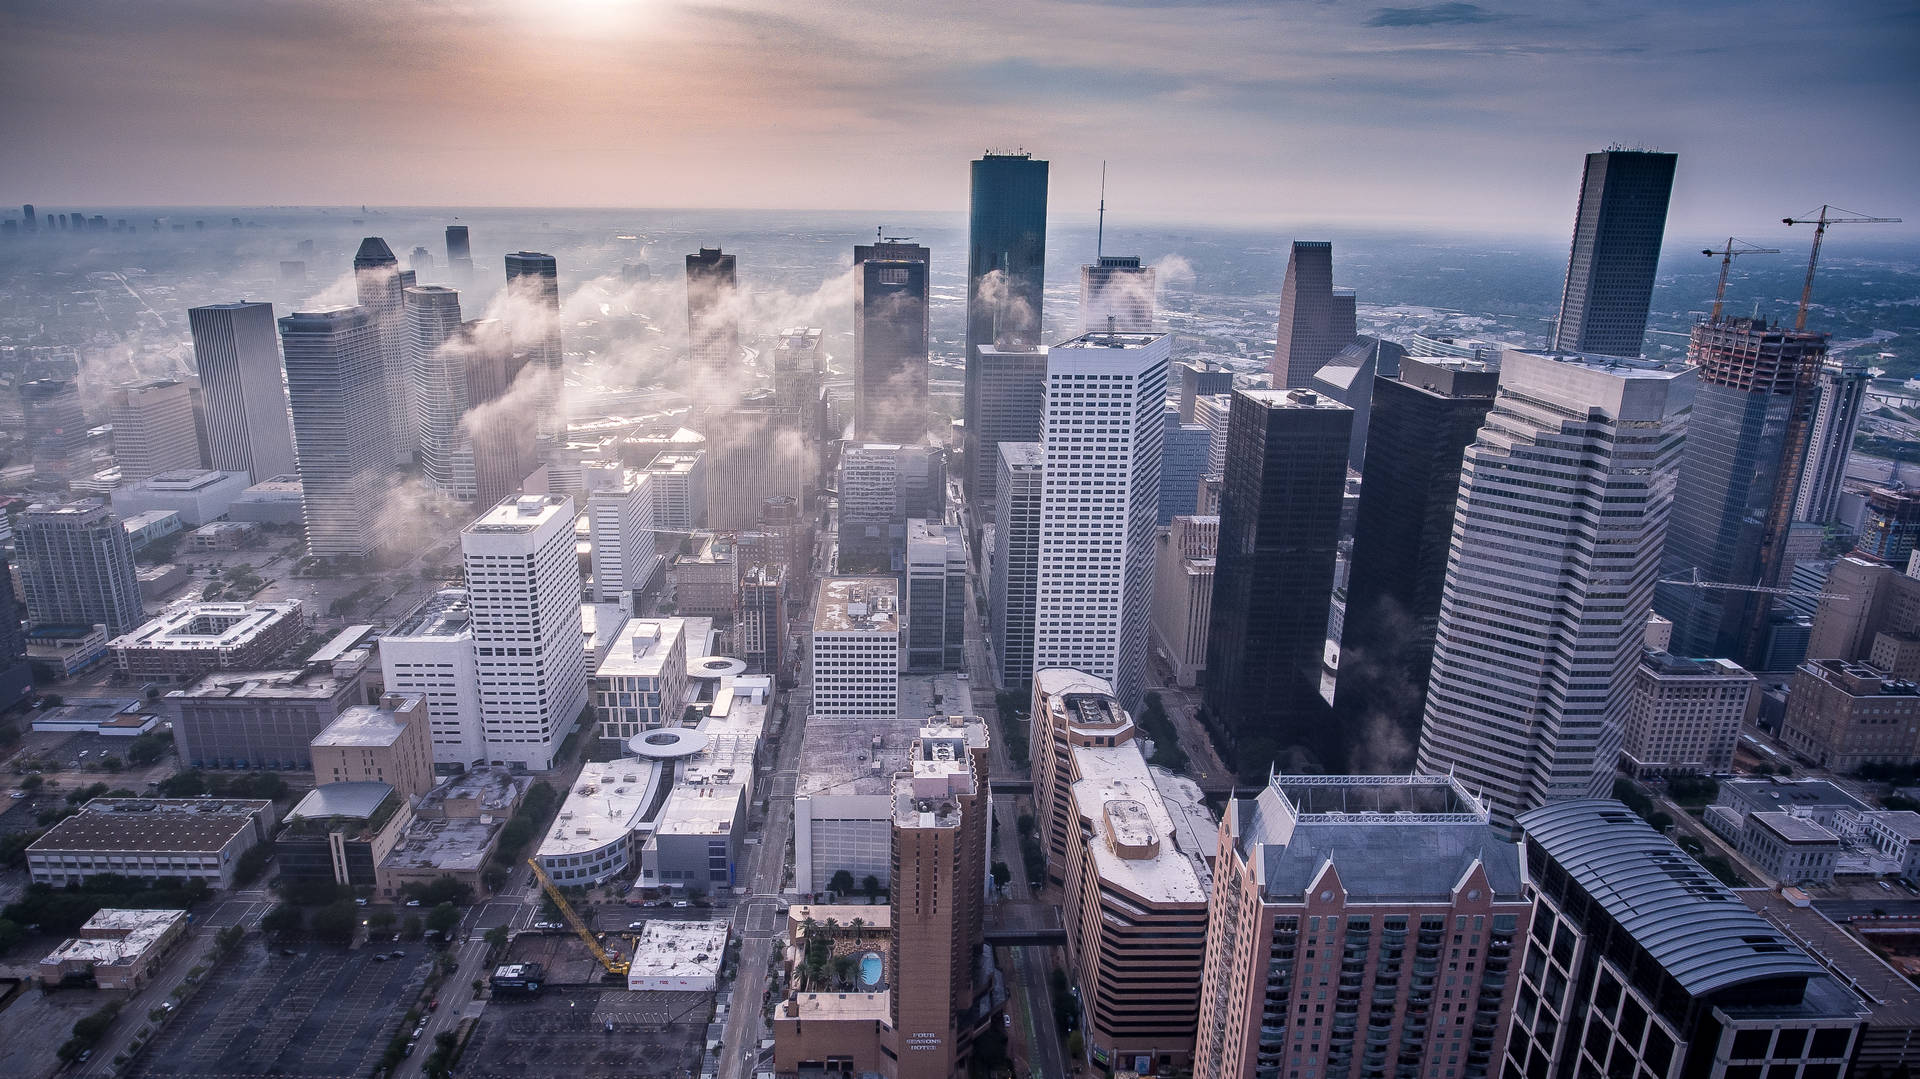 Houston Texas City Skyline